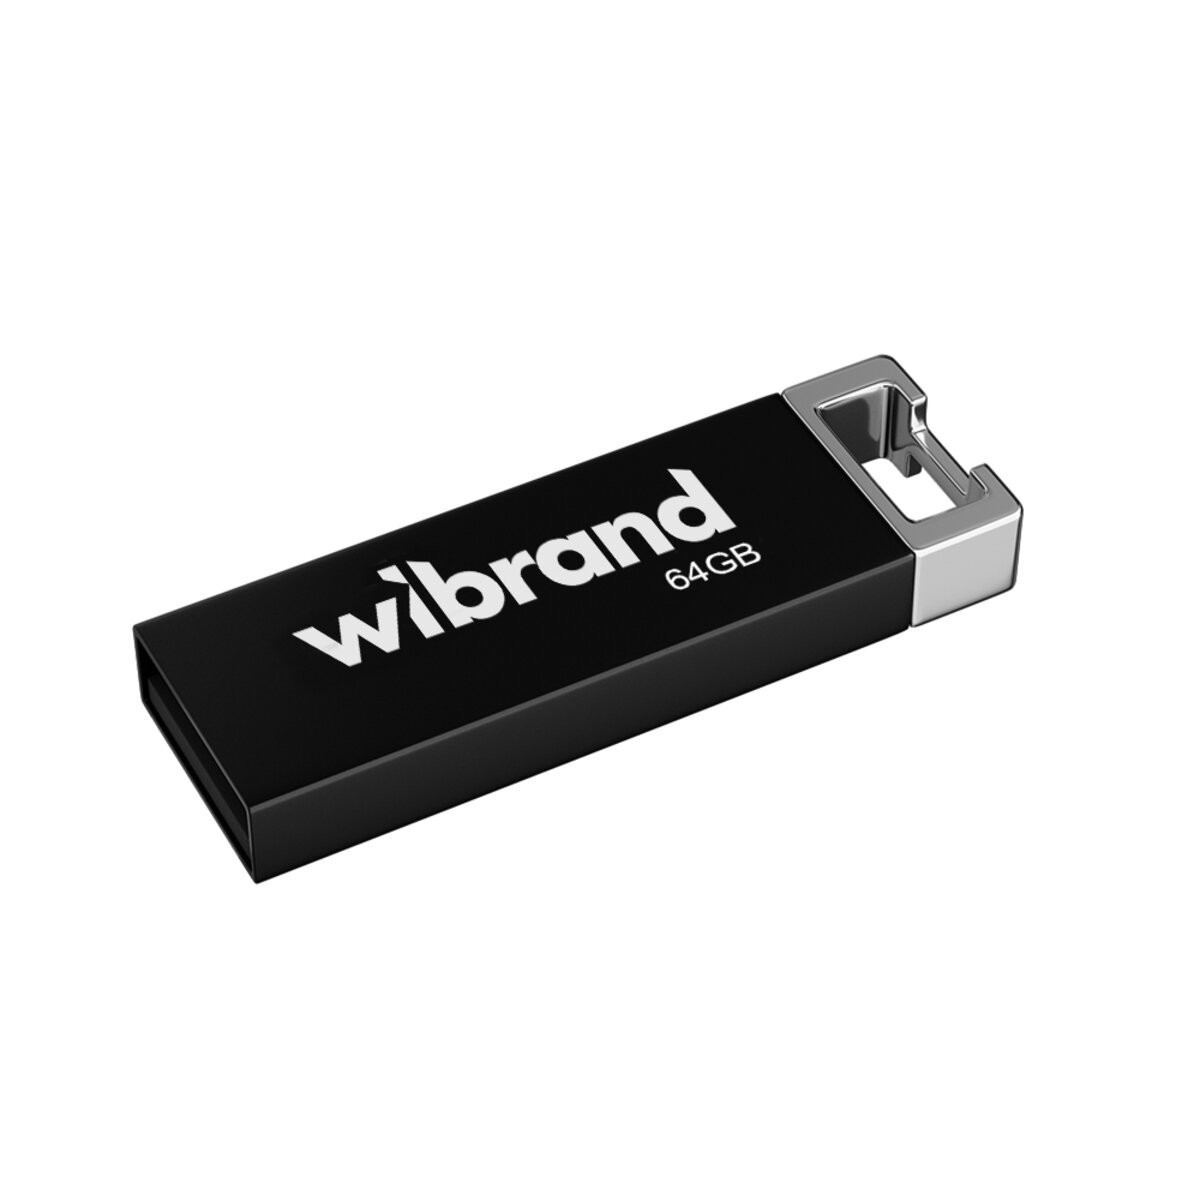 Флешка Wibrand USB 2.0 Chameleon 64Gb Black - 1